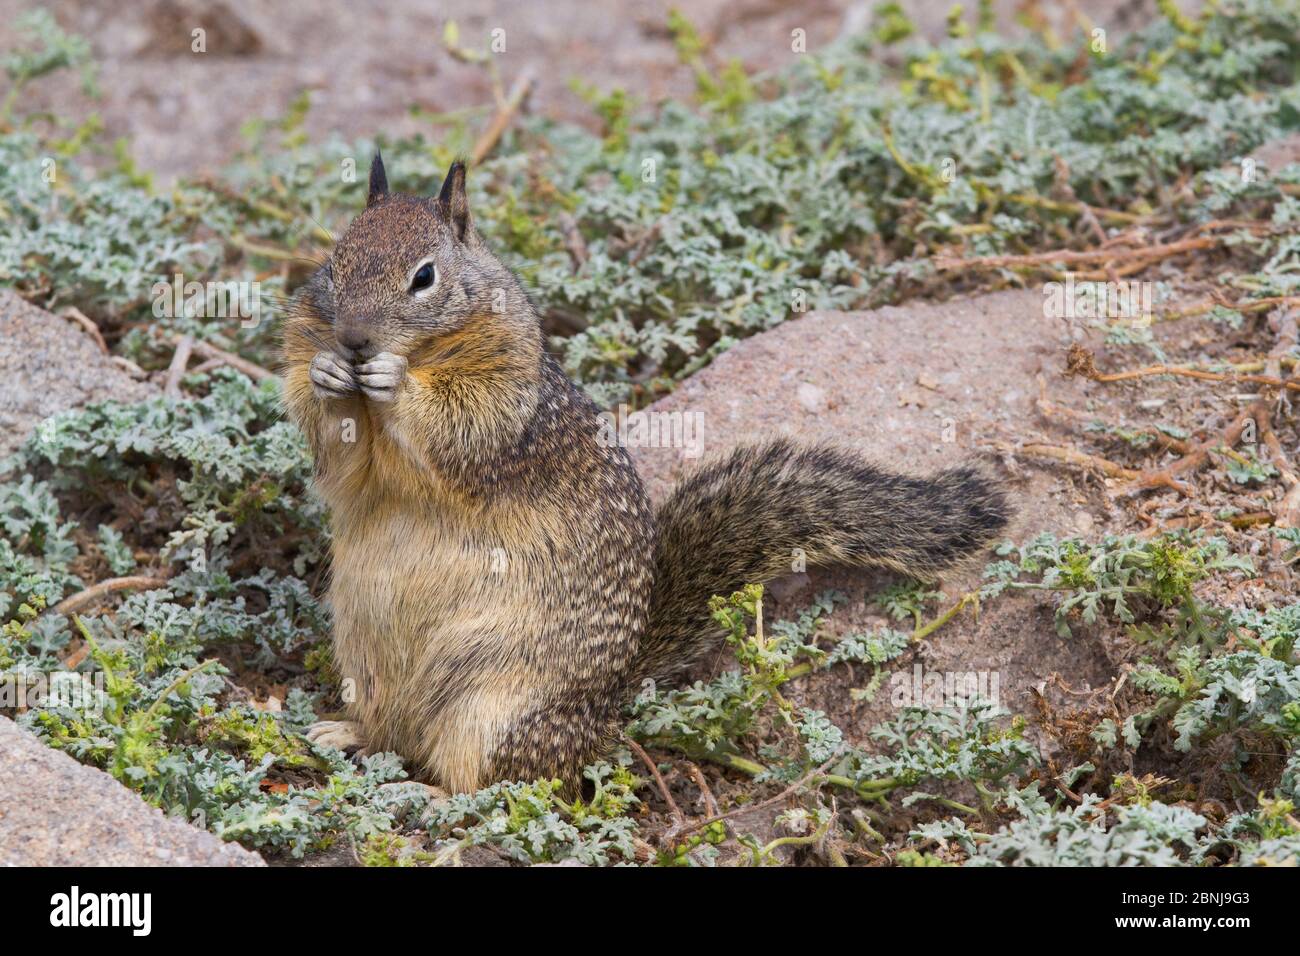 California ground squirrel (Spermophilus beecheyi) in seaside vegetation and rocks, Monterey, California, USA Stock Photo